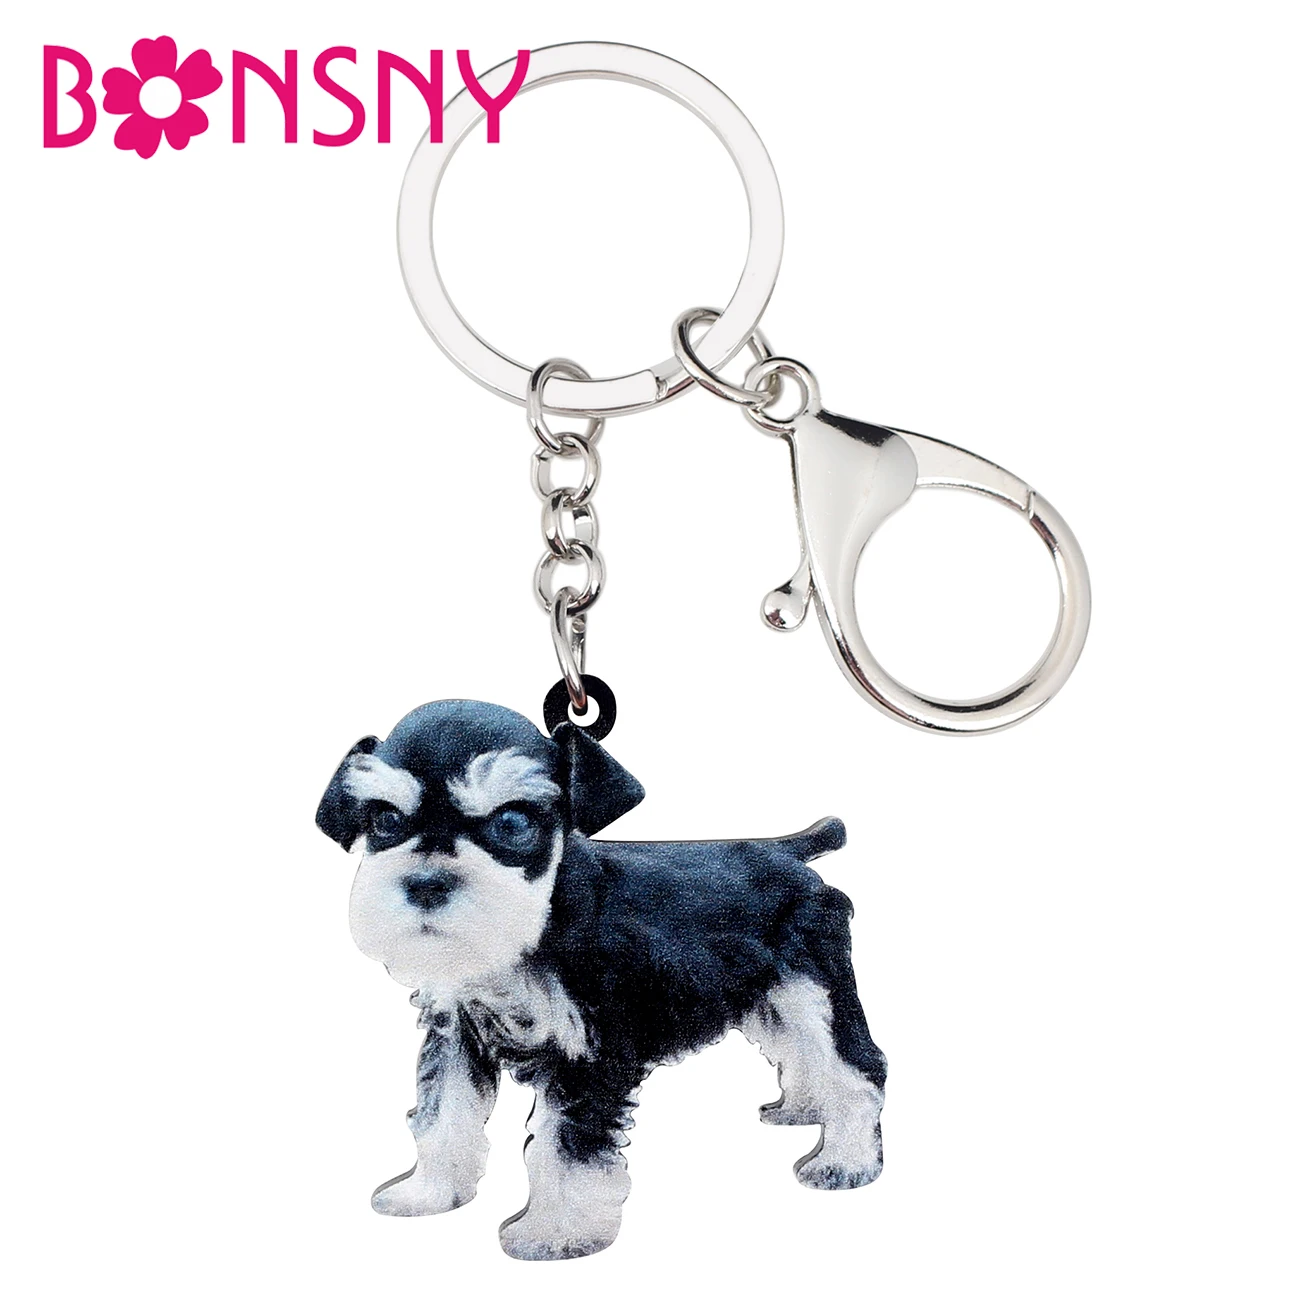 

Bonsny Statement Acrylic Cute Mini Schnauzer Dog Key Chain Keychains Fashion Jewelry For Women Girls Bag Car Pendant Charms Gift